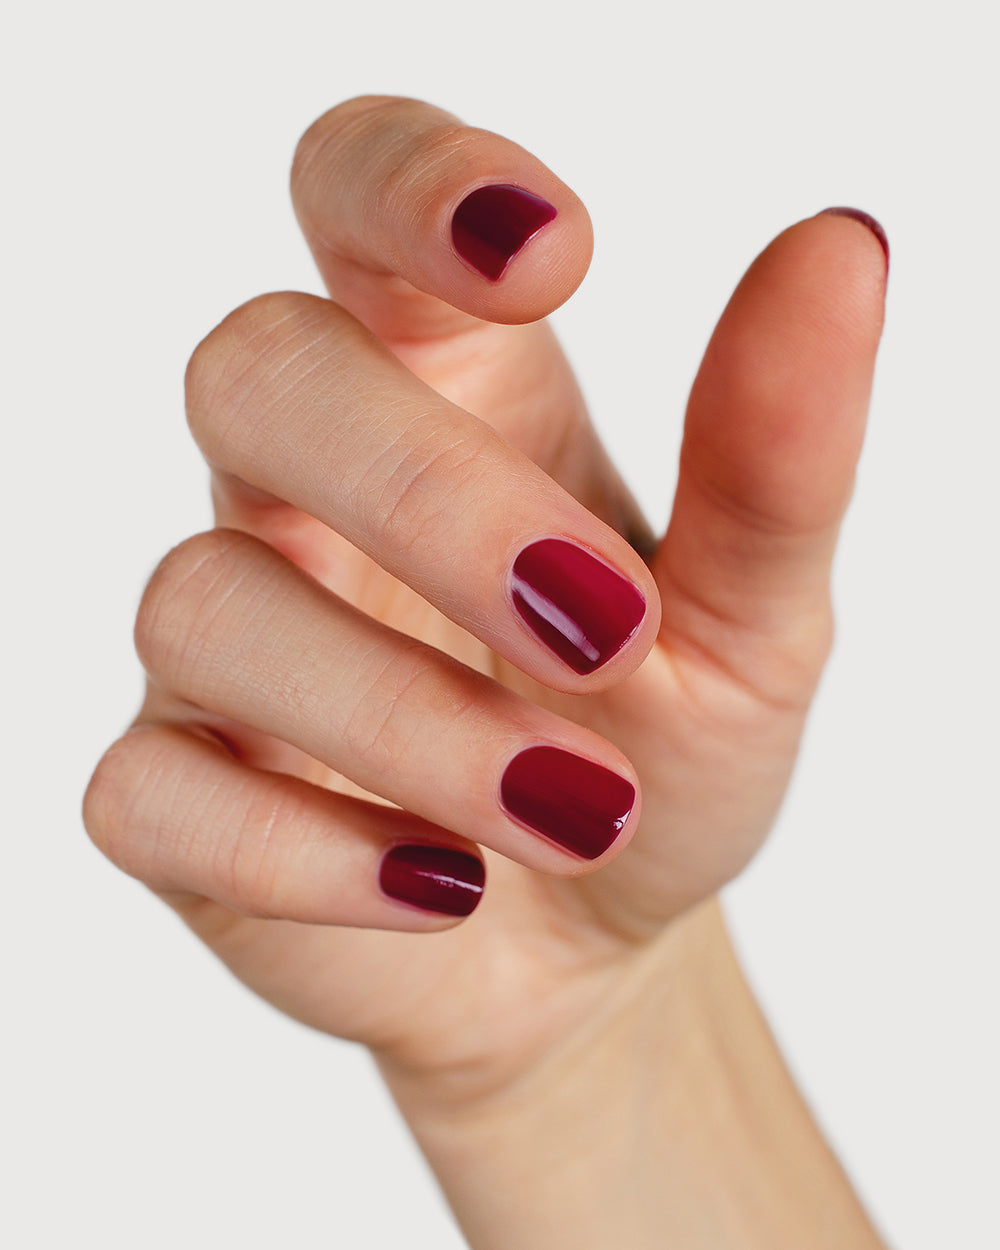 Plum red nail polish hand swatch on fair skin tone